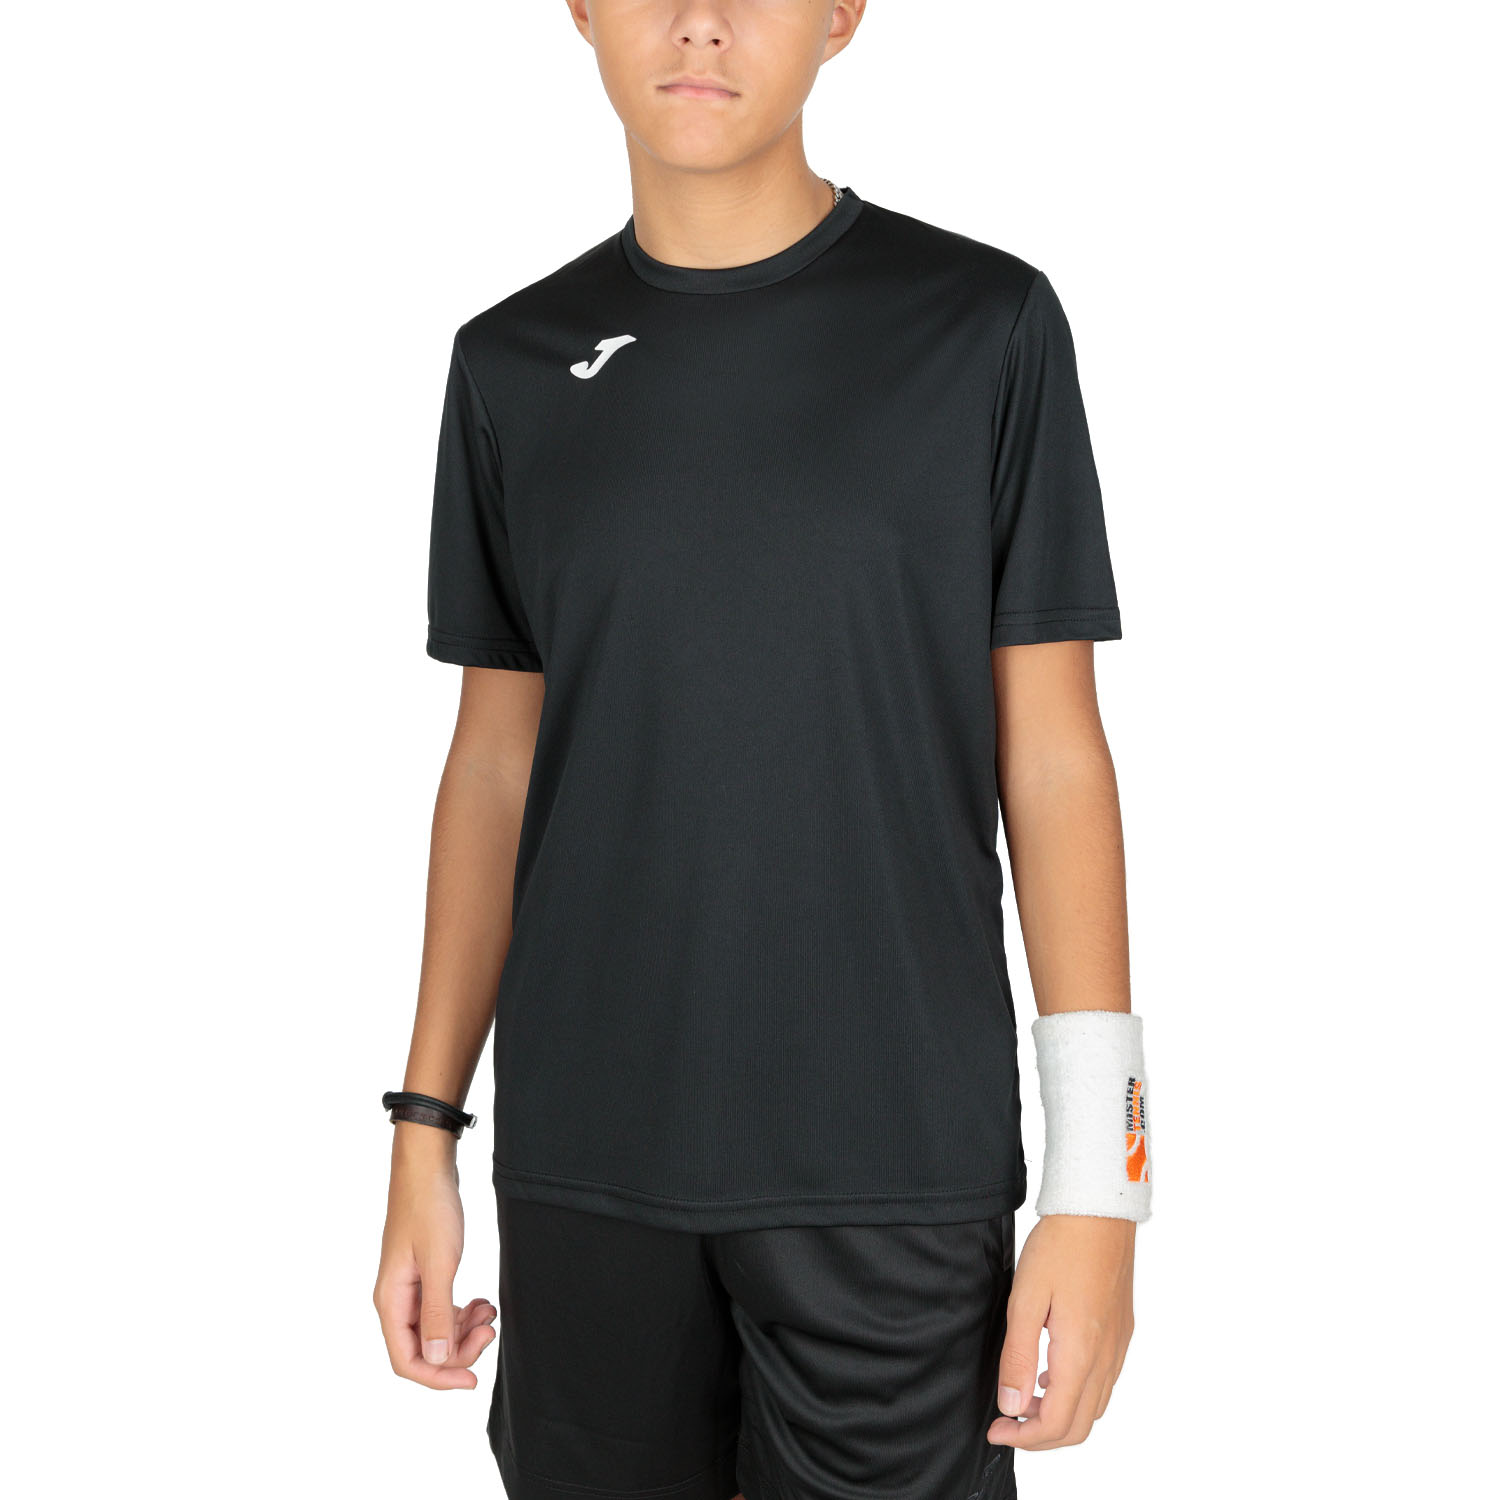 Joma Combi T-Shirt Boy - Black/White